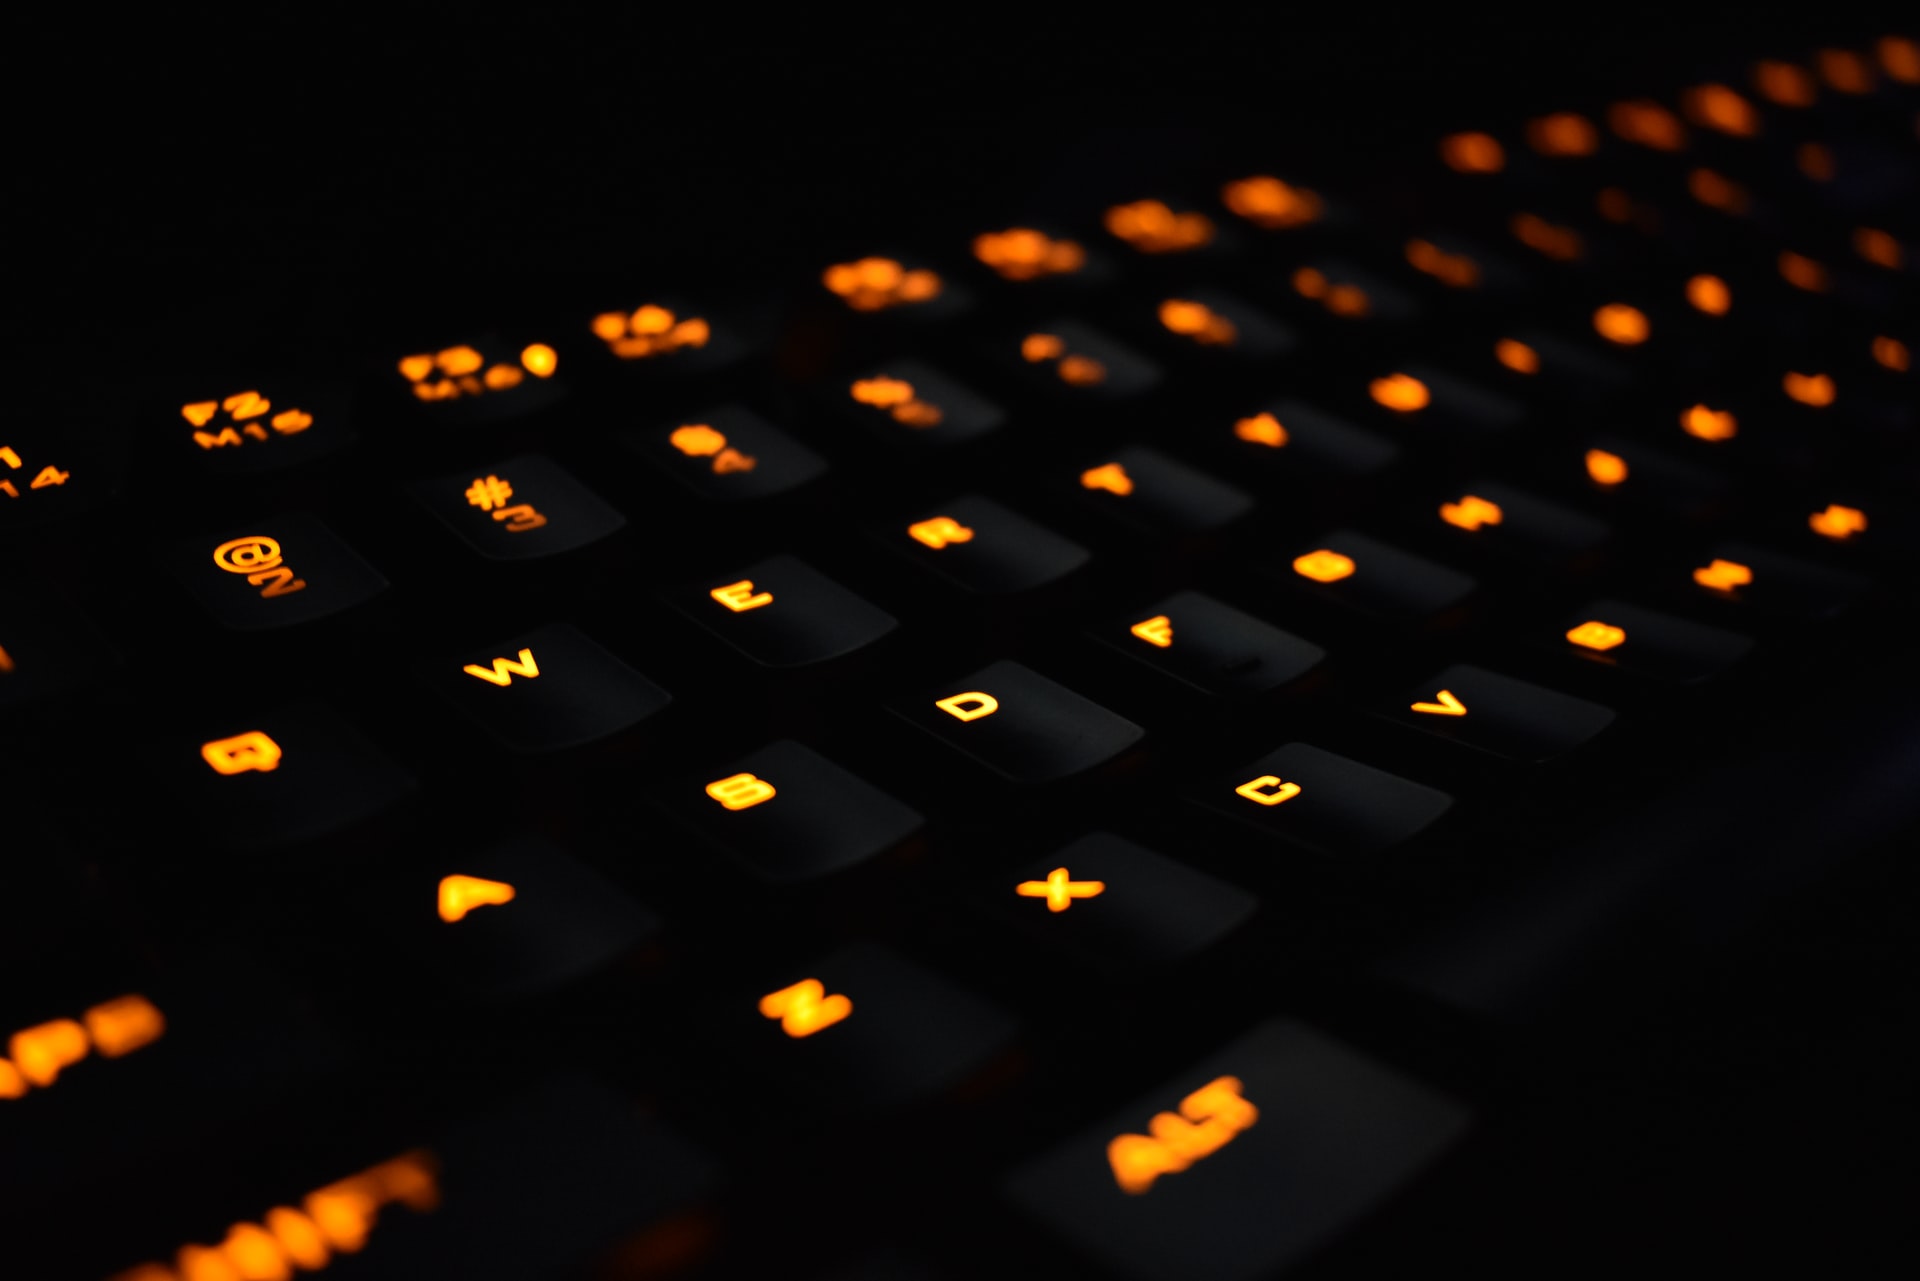 A backlit keyboard